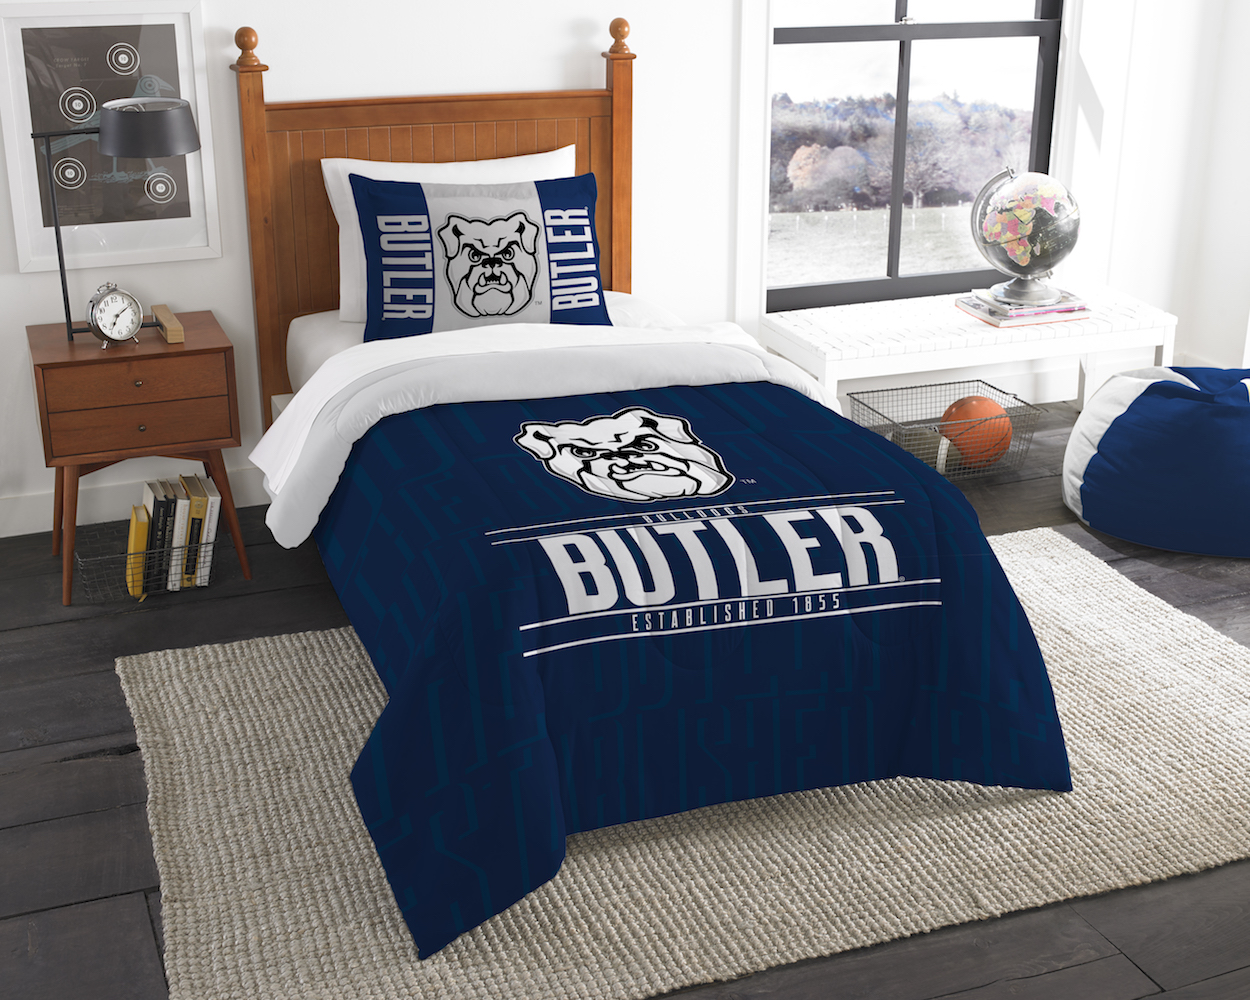 Butler Bulldogs Twin Comforter Set with Sham